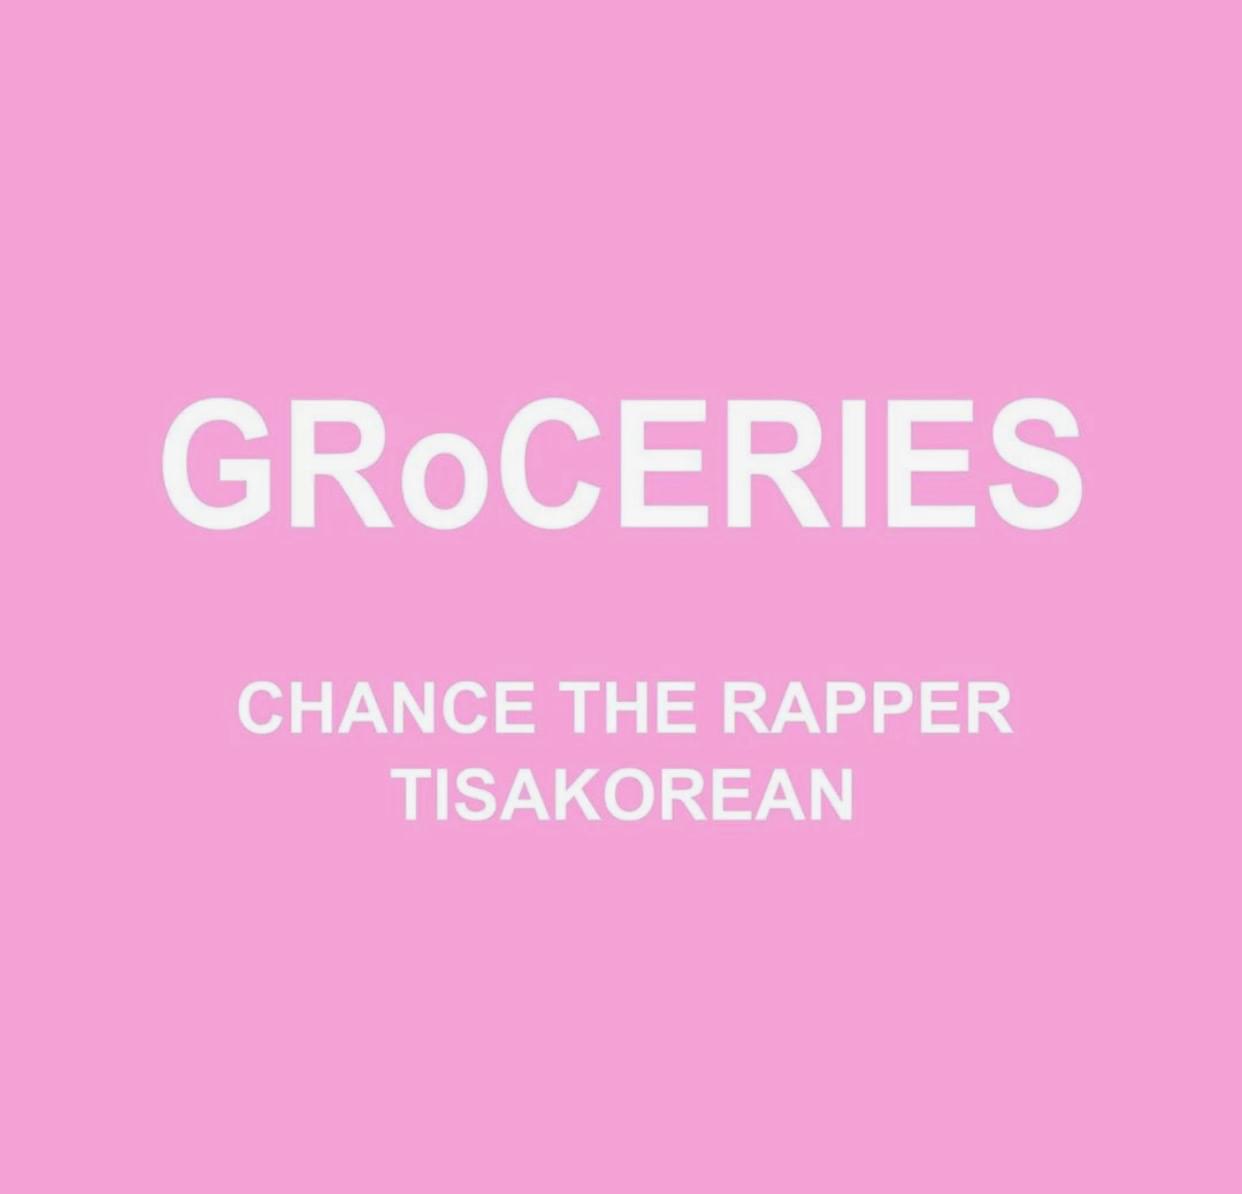 New Music: Chance The Rapper – “Groceries” Feat. TISAKOREAN [LISTEN]